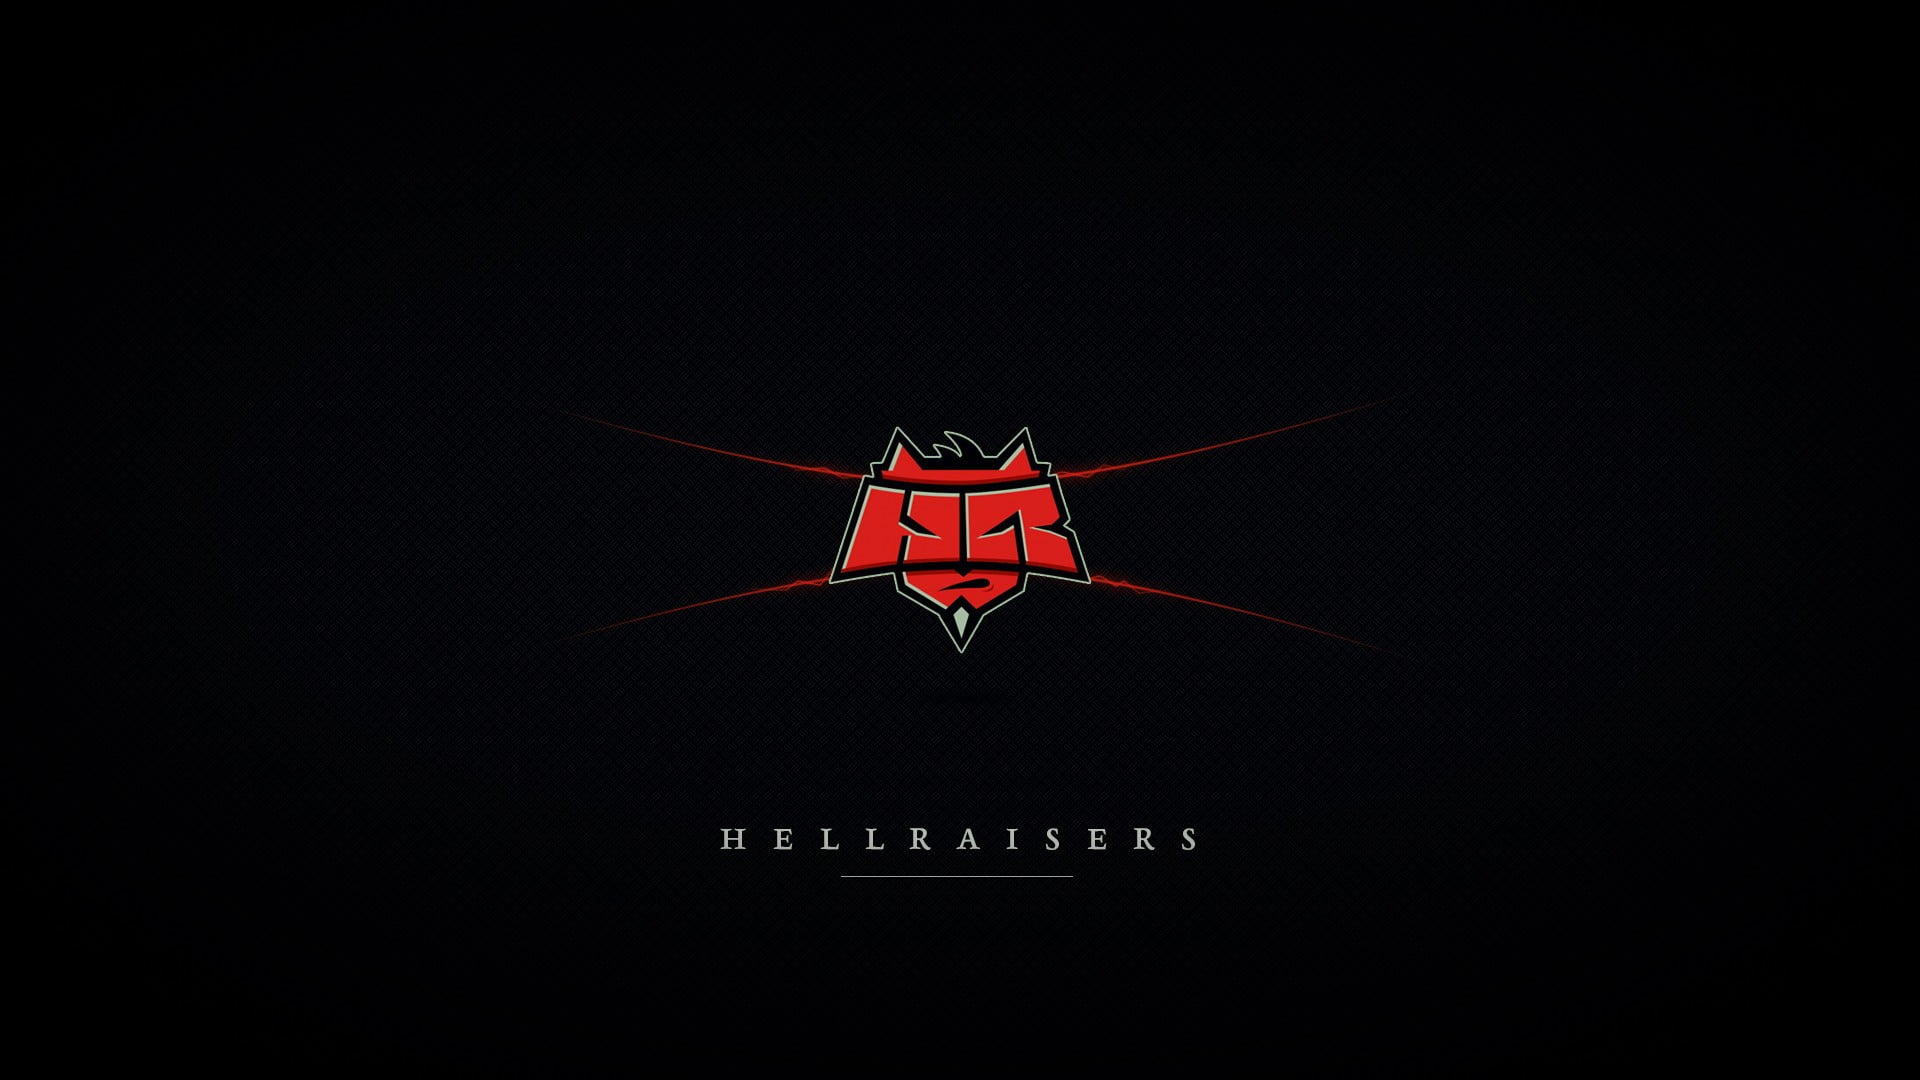 Hellraisers logo, Counter-Strike: Global Offensive, HellRaisers